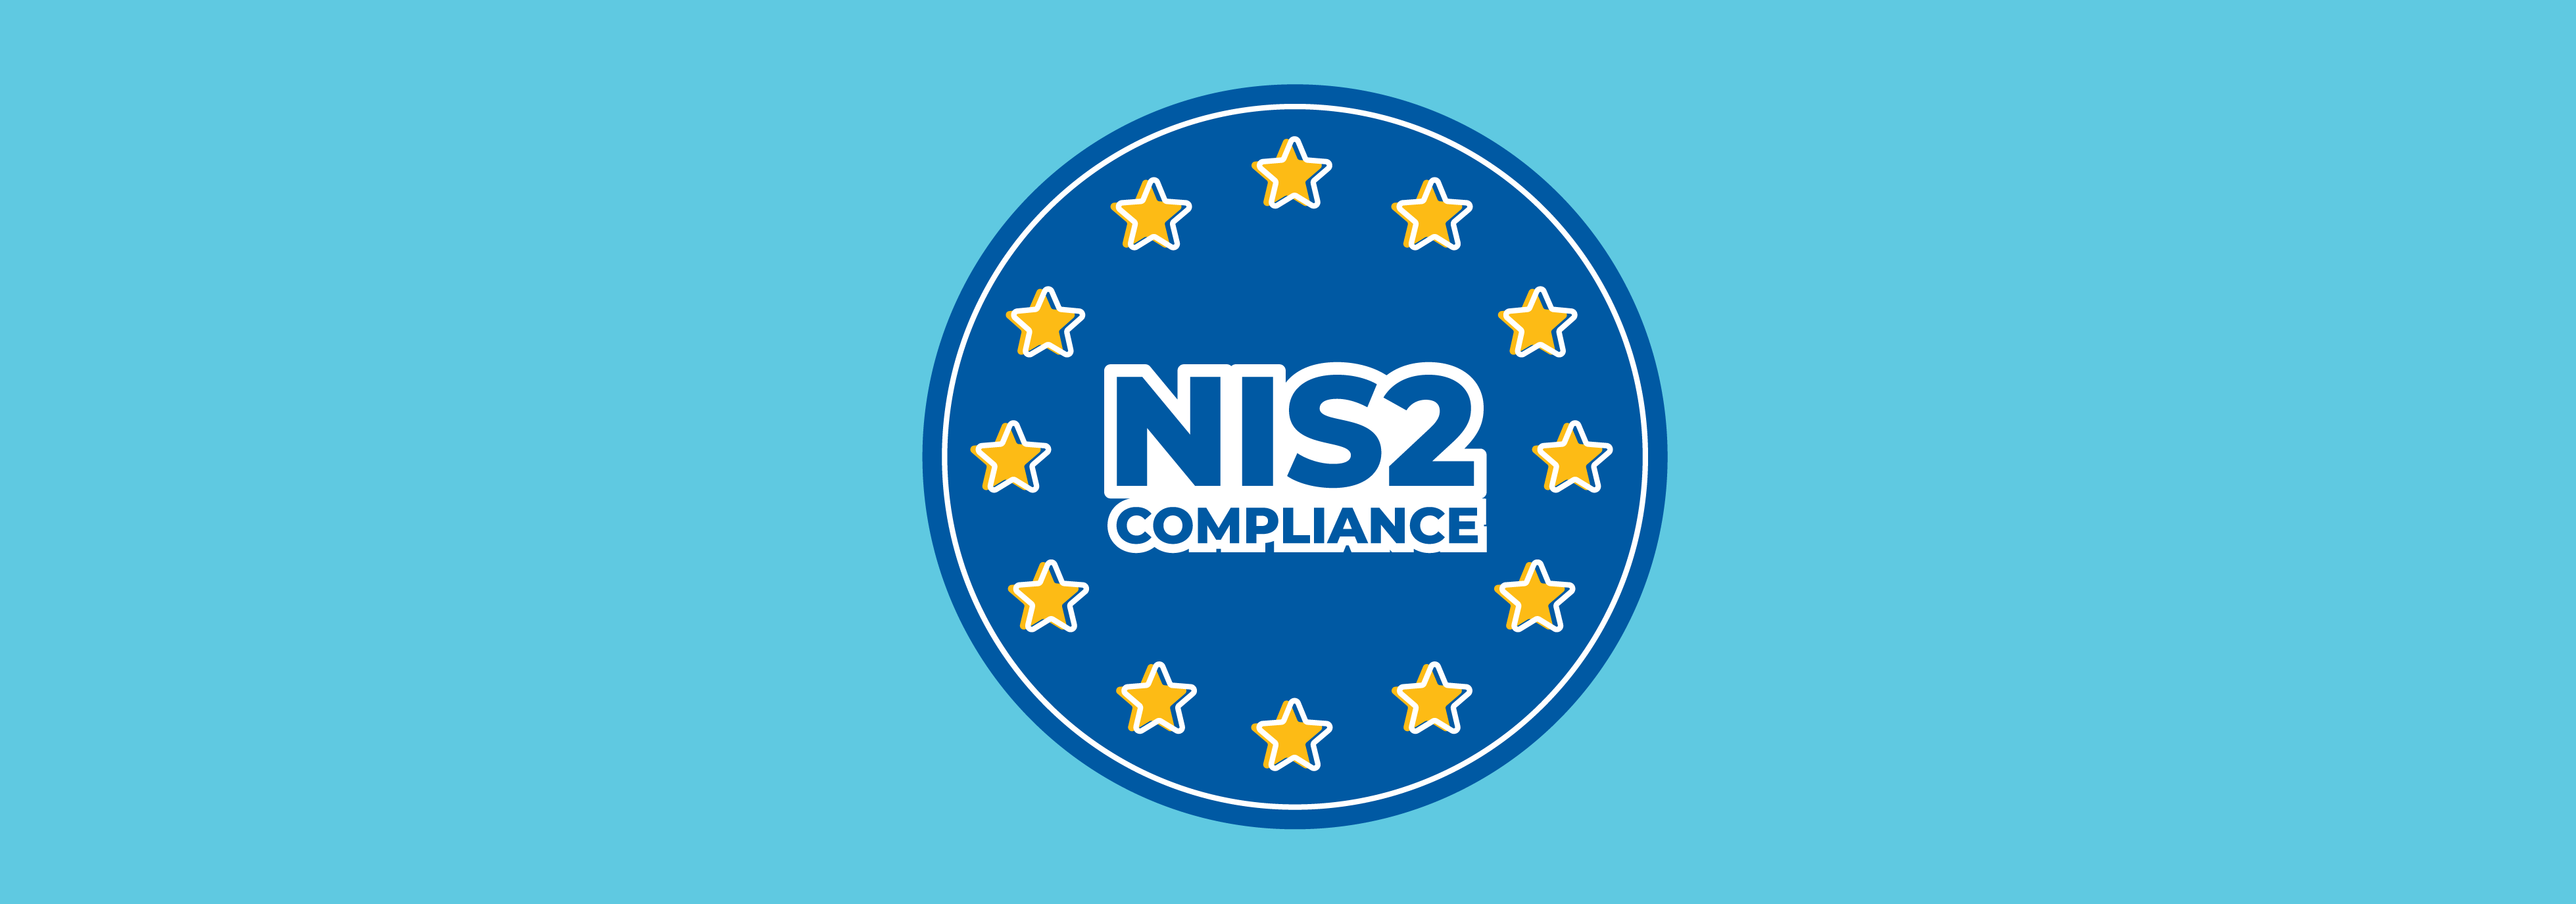 nis2 compliance